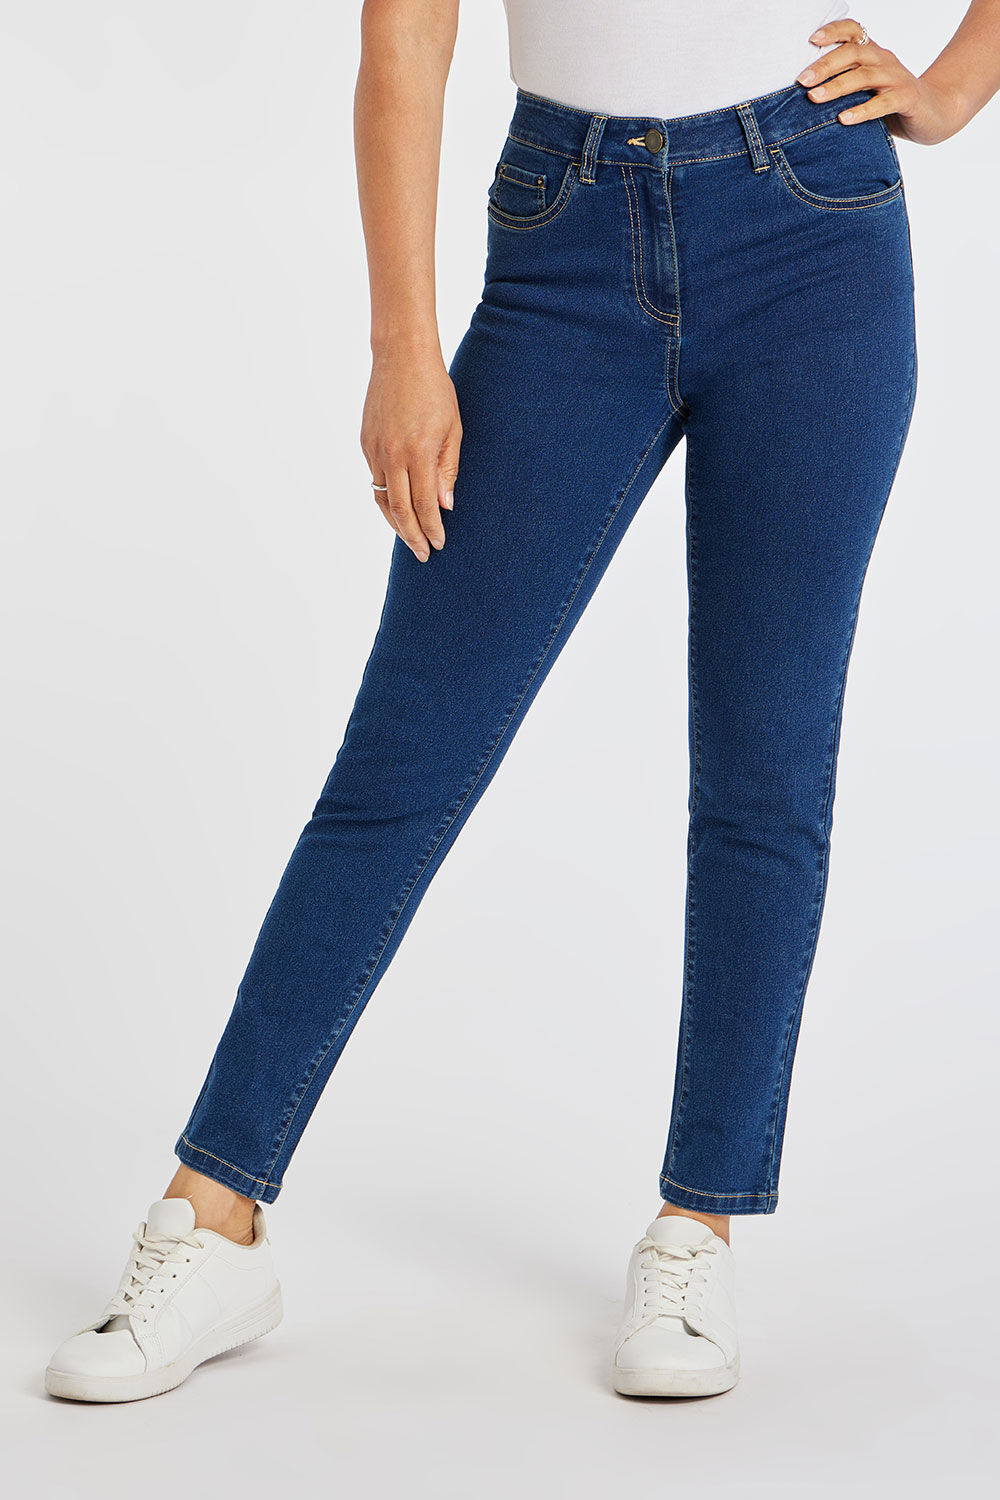 Bonmarche Denim The Susie Slim Leg Jeans, Size: 12